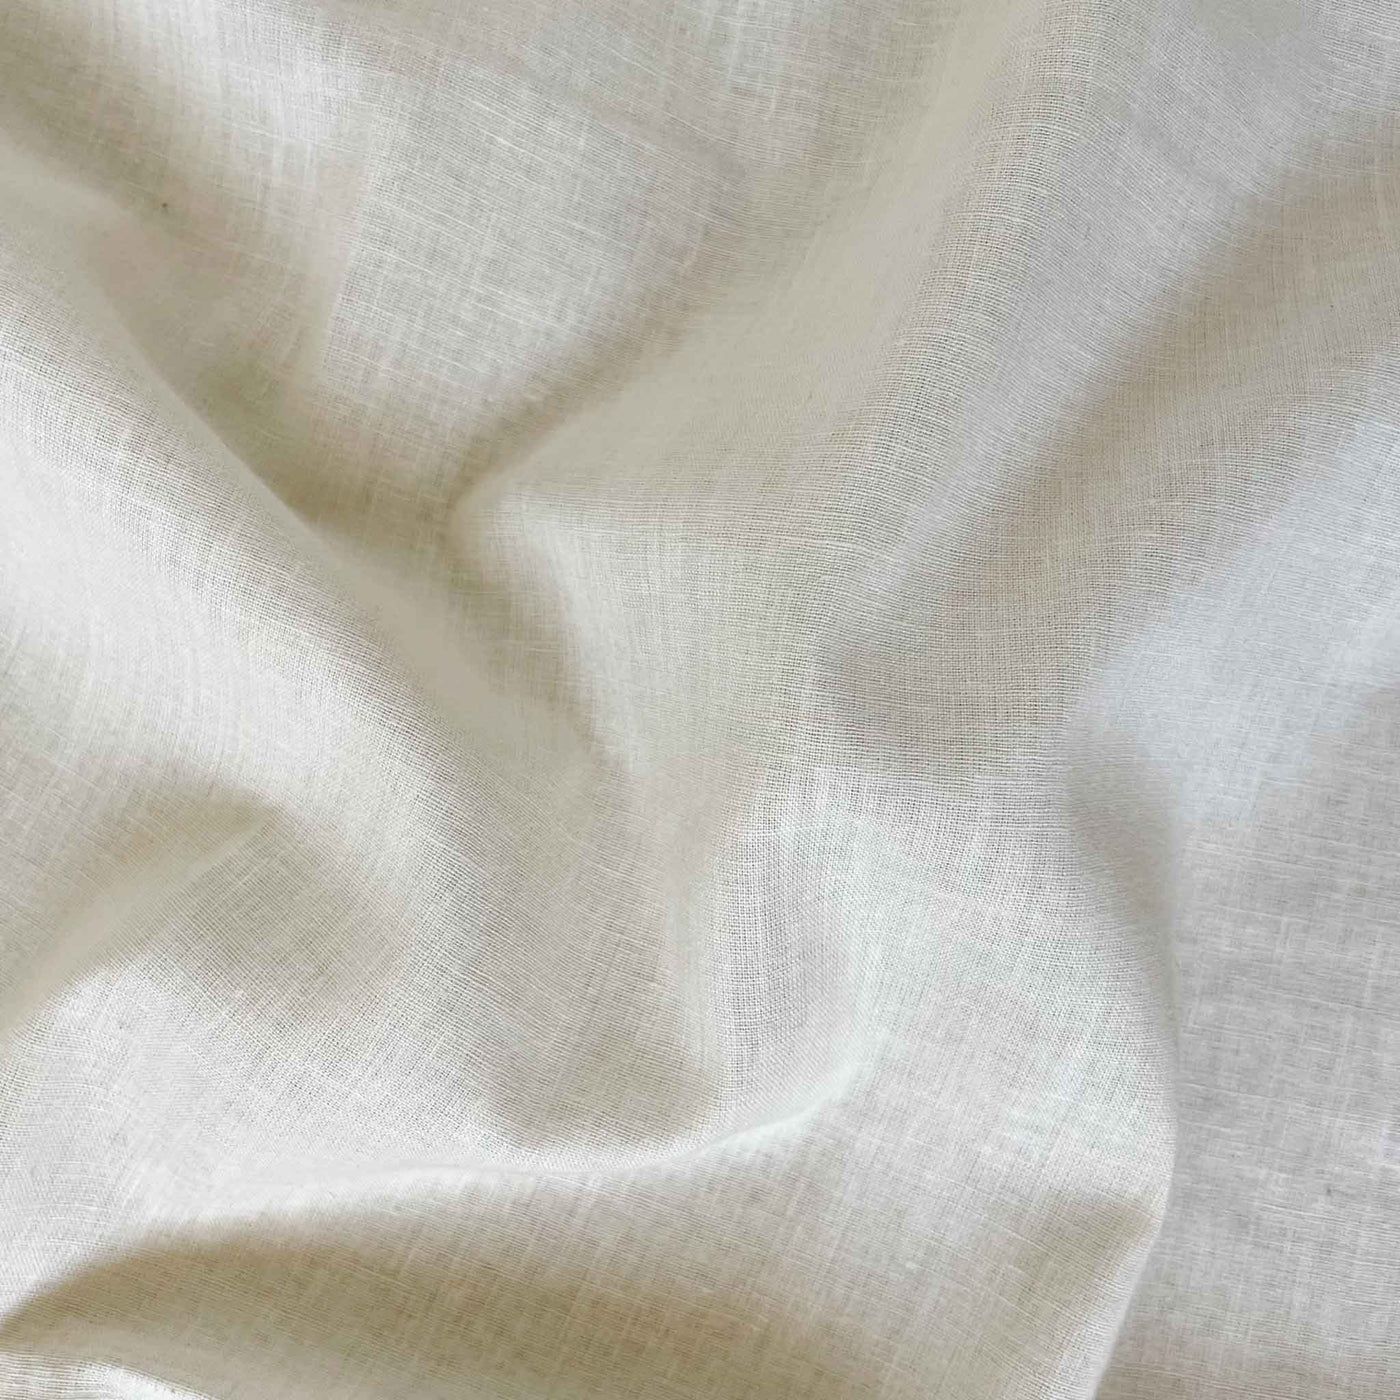 Fabric Pandit Fabric Women's Soft Gold & Orange Sunflower Bunch | Hand Block Printed Pure Cotton Denting Kurta Fabric (2.5 meters) | And Cotton Pyjama (2.5 meters) | Unstitched Combo Set